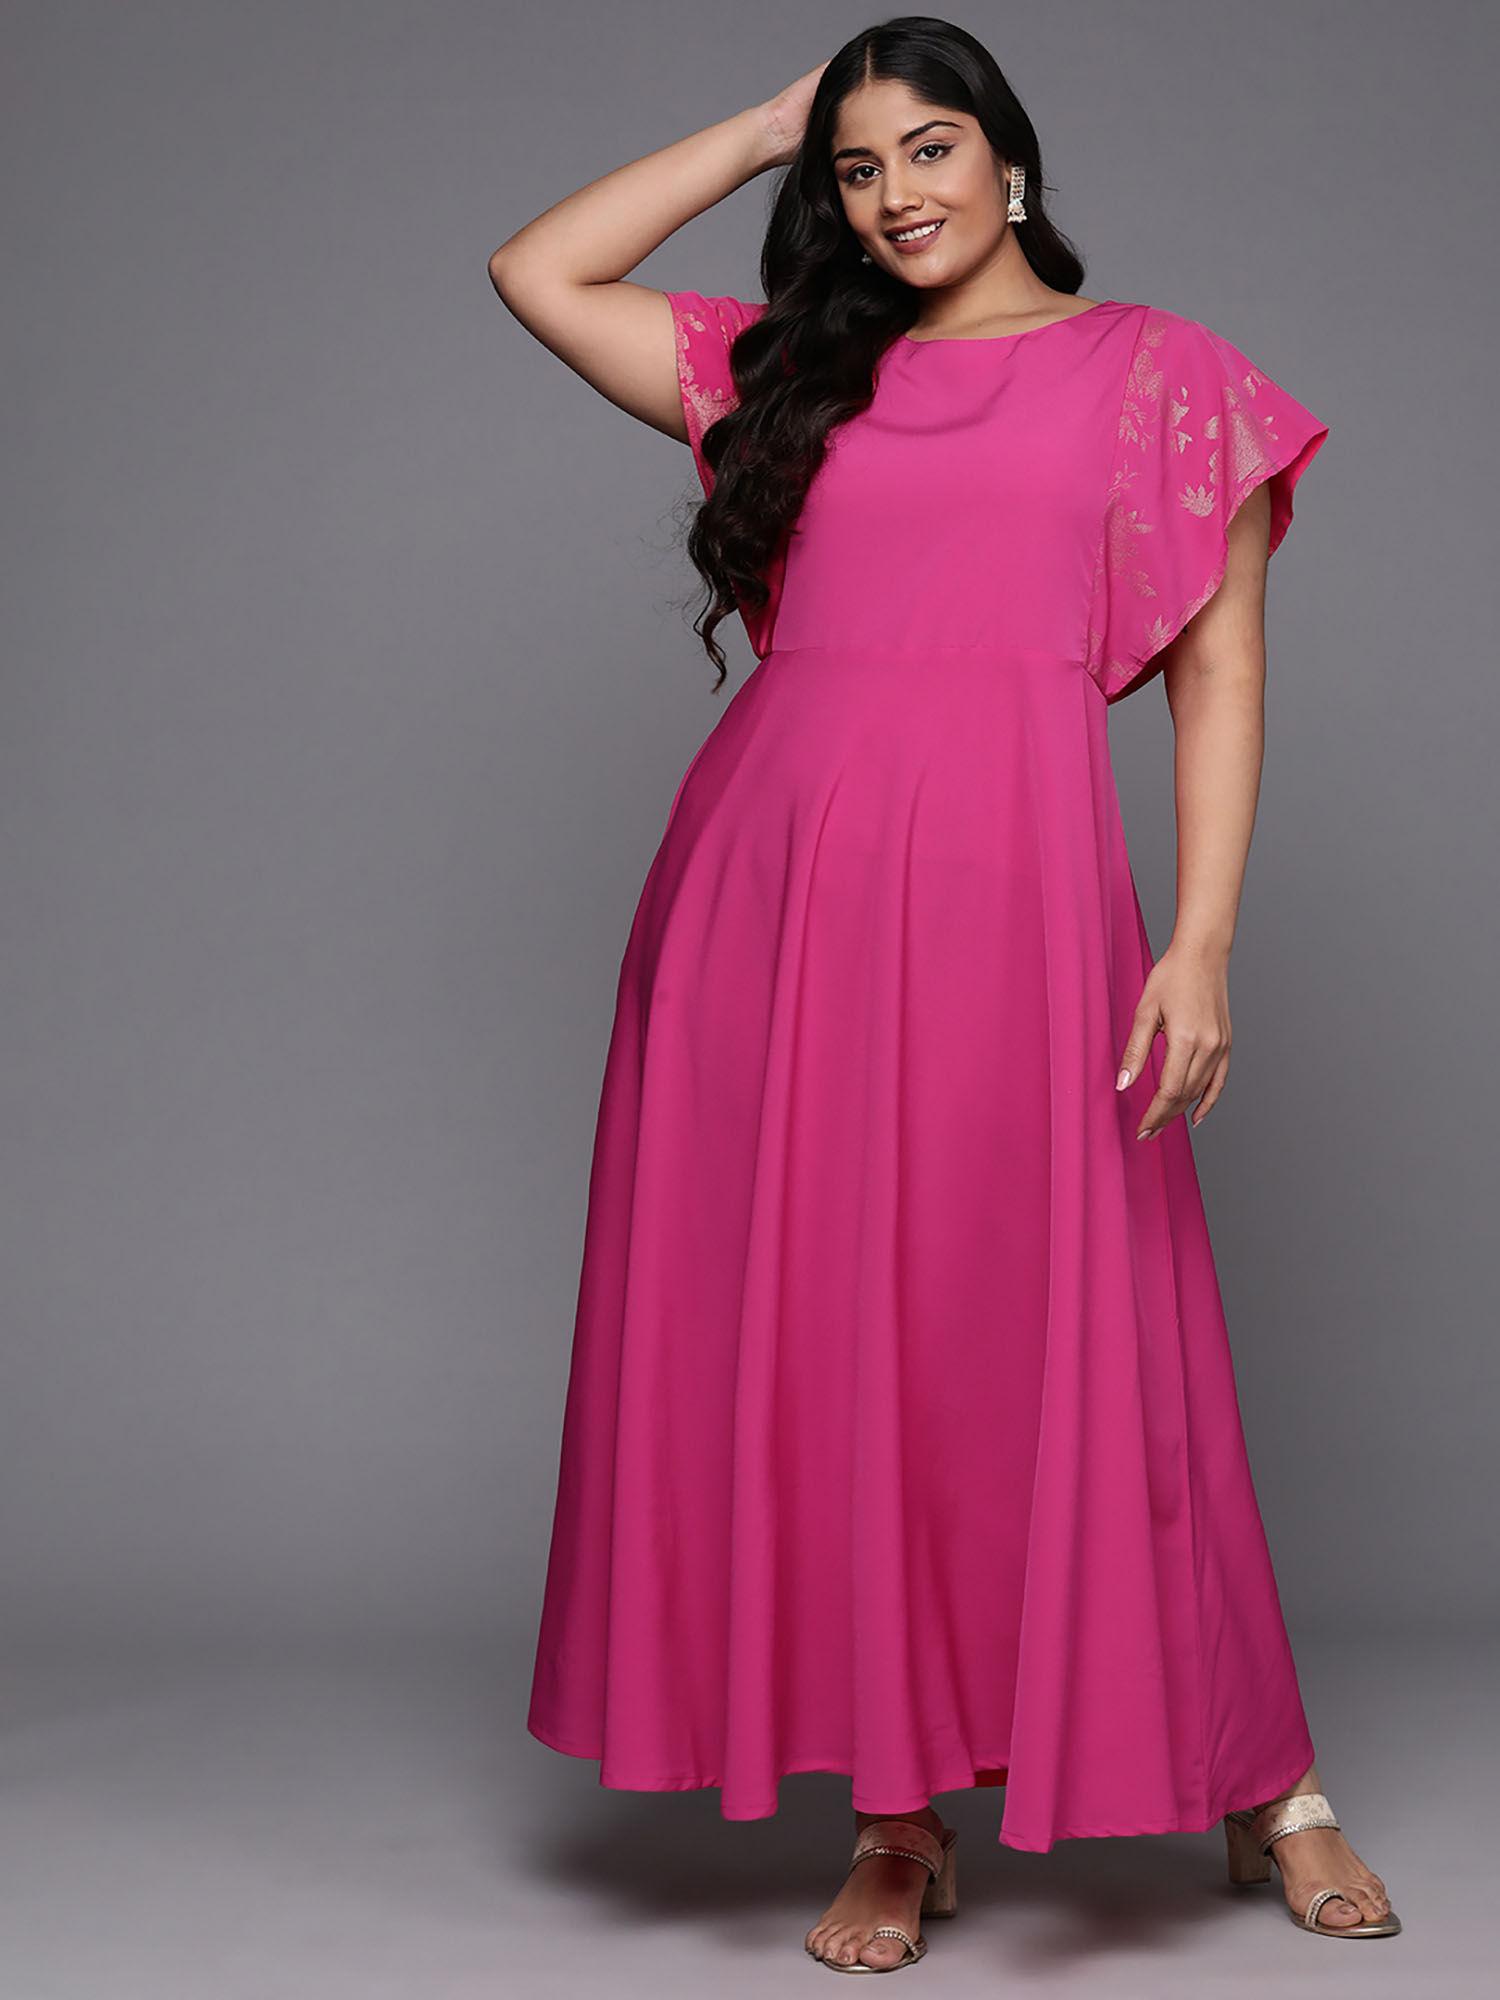 women's traditional wear ethnic dress pink